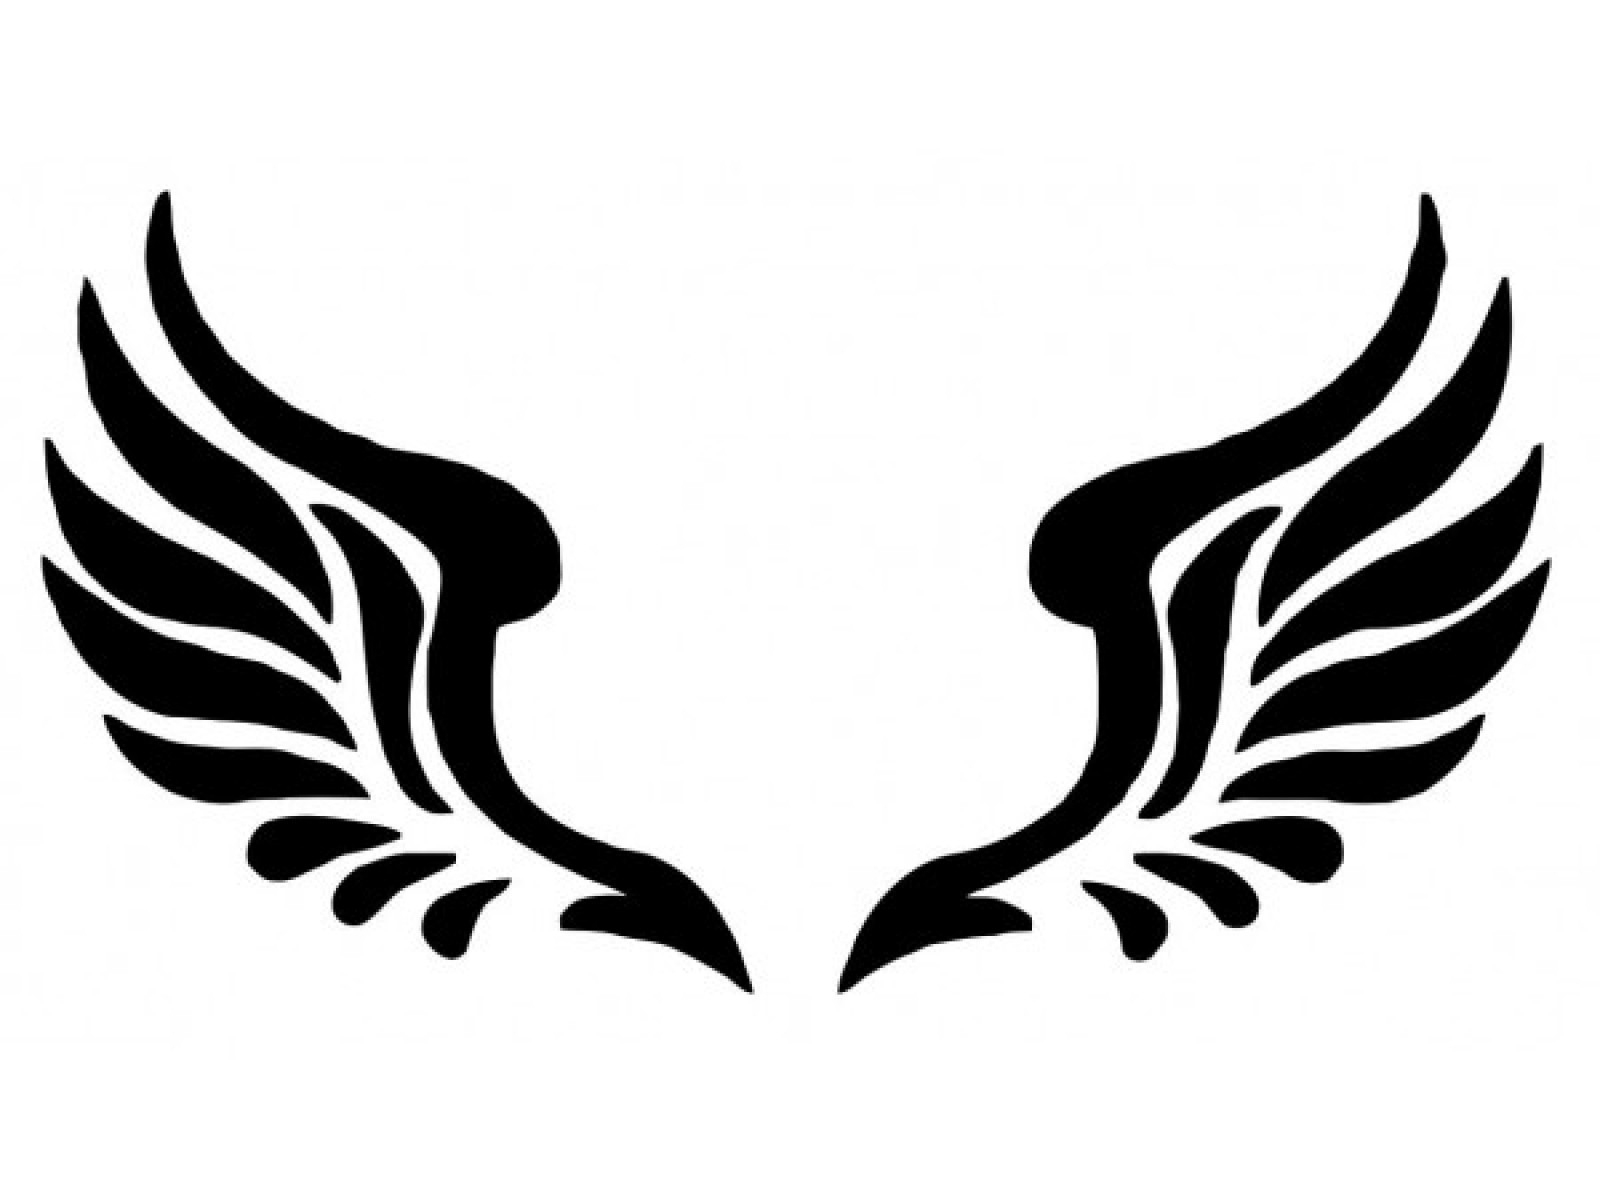 Angel Wings Silhouette - Clipart Best dedans Wing Clipart 